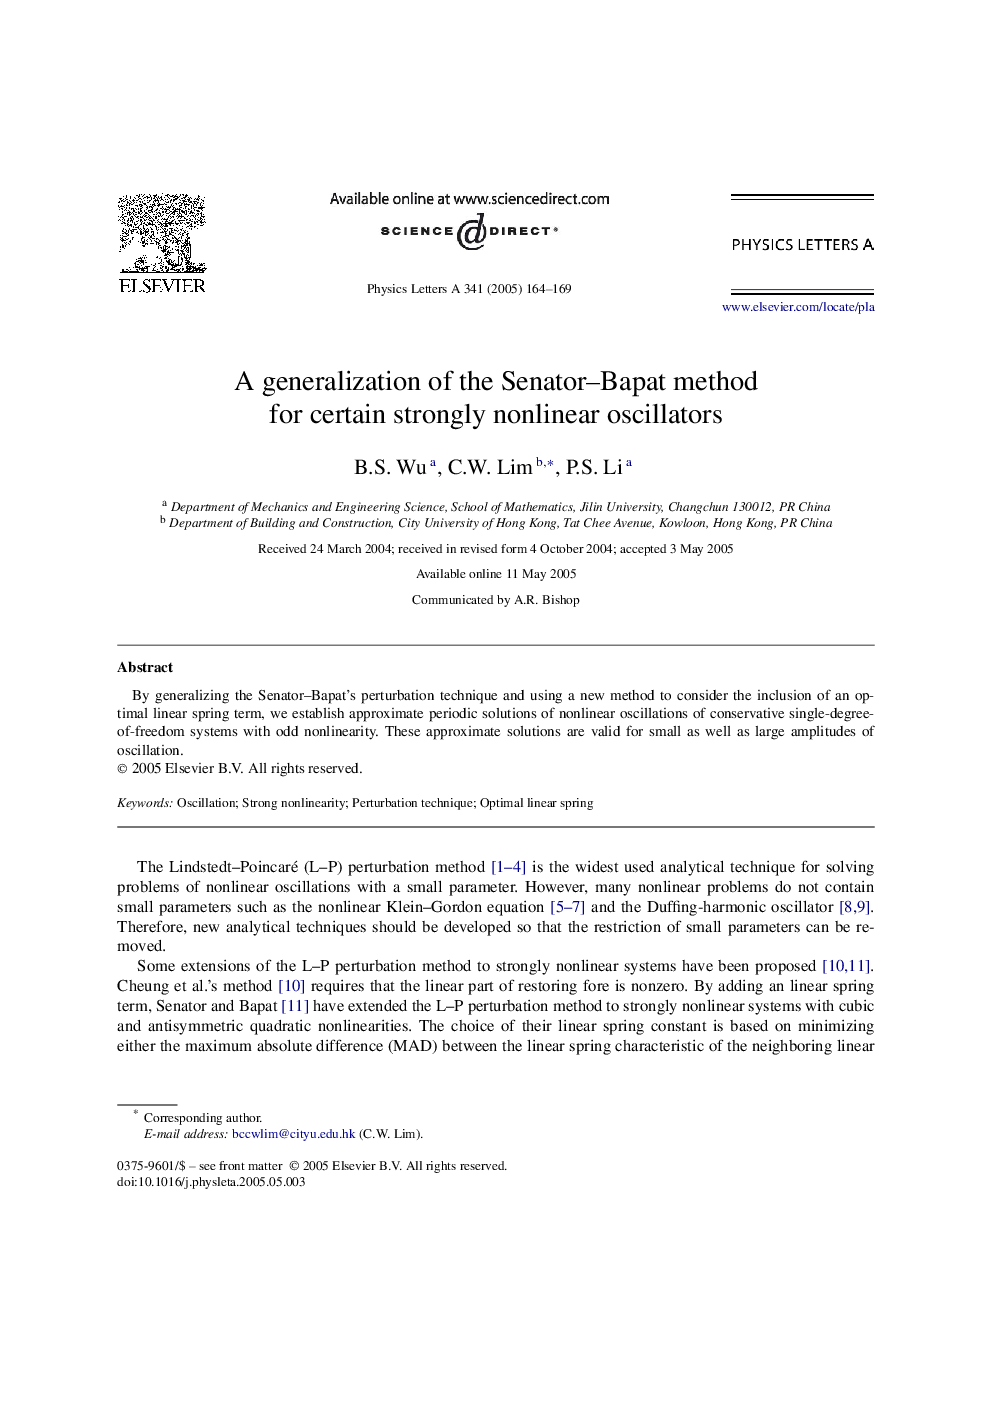 A generalization of the Senator-Bapat method for certain strongly nonlinear oscillators